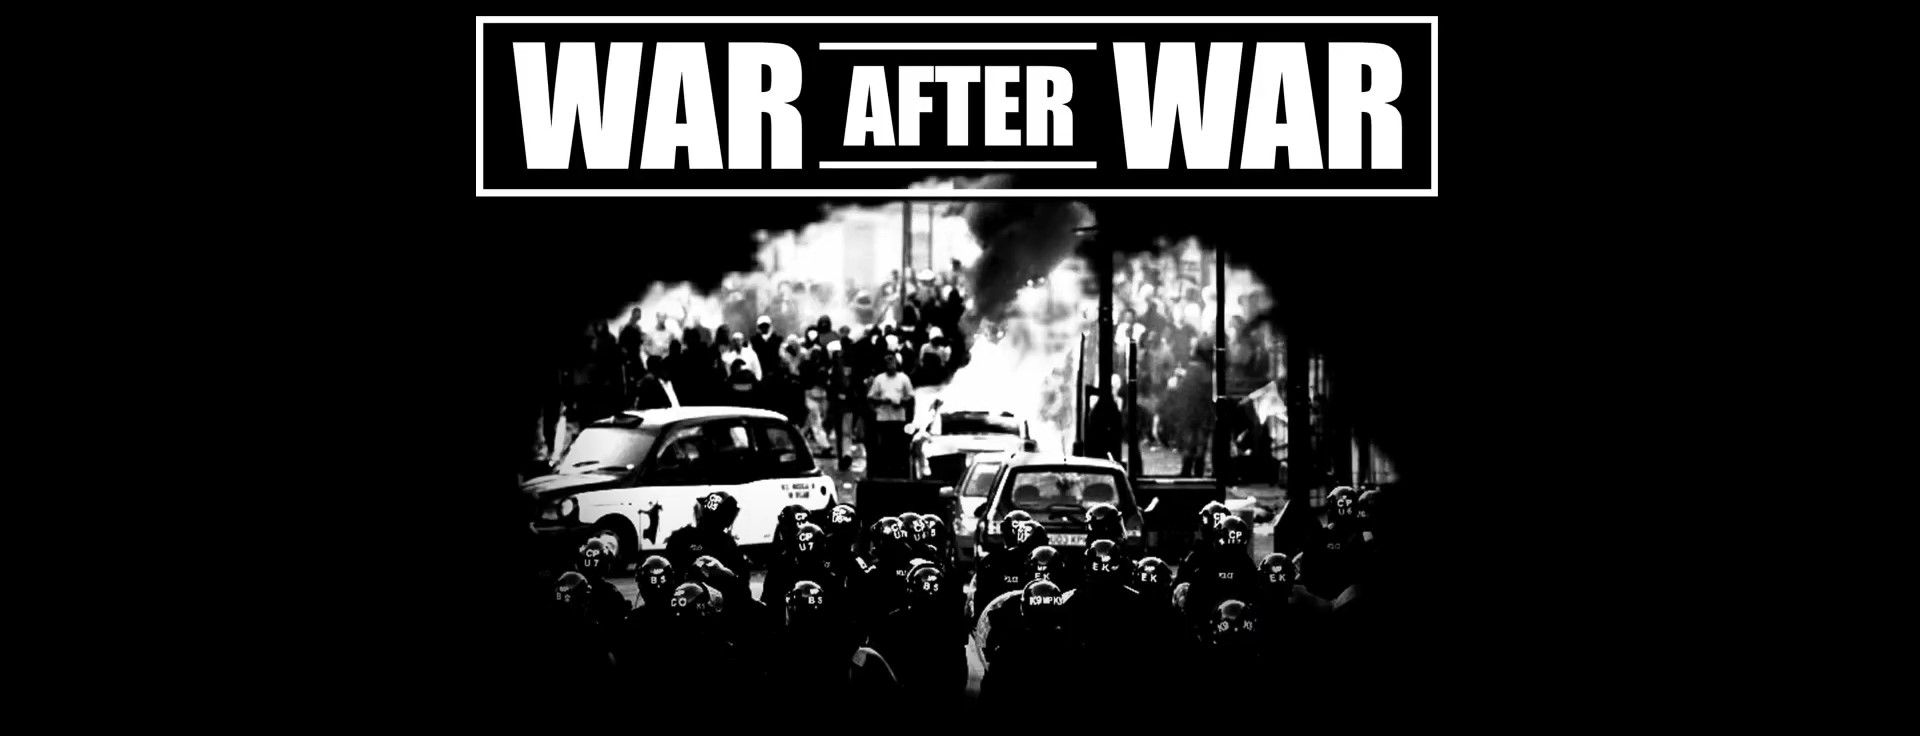 War After War - No Change (Live at APF Records 2020)